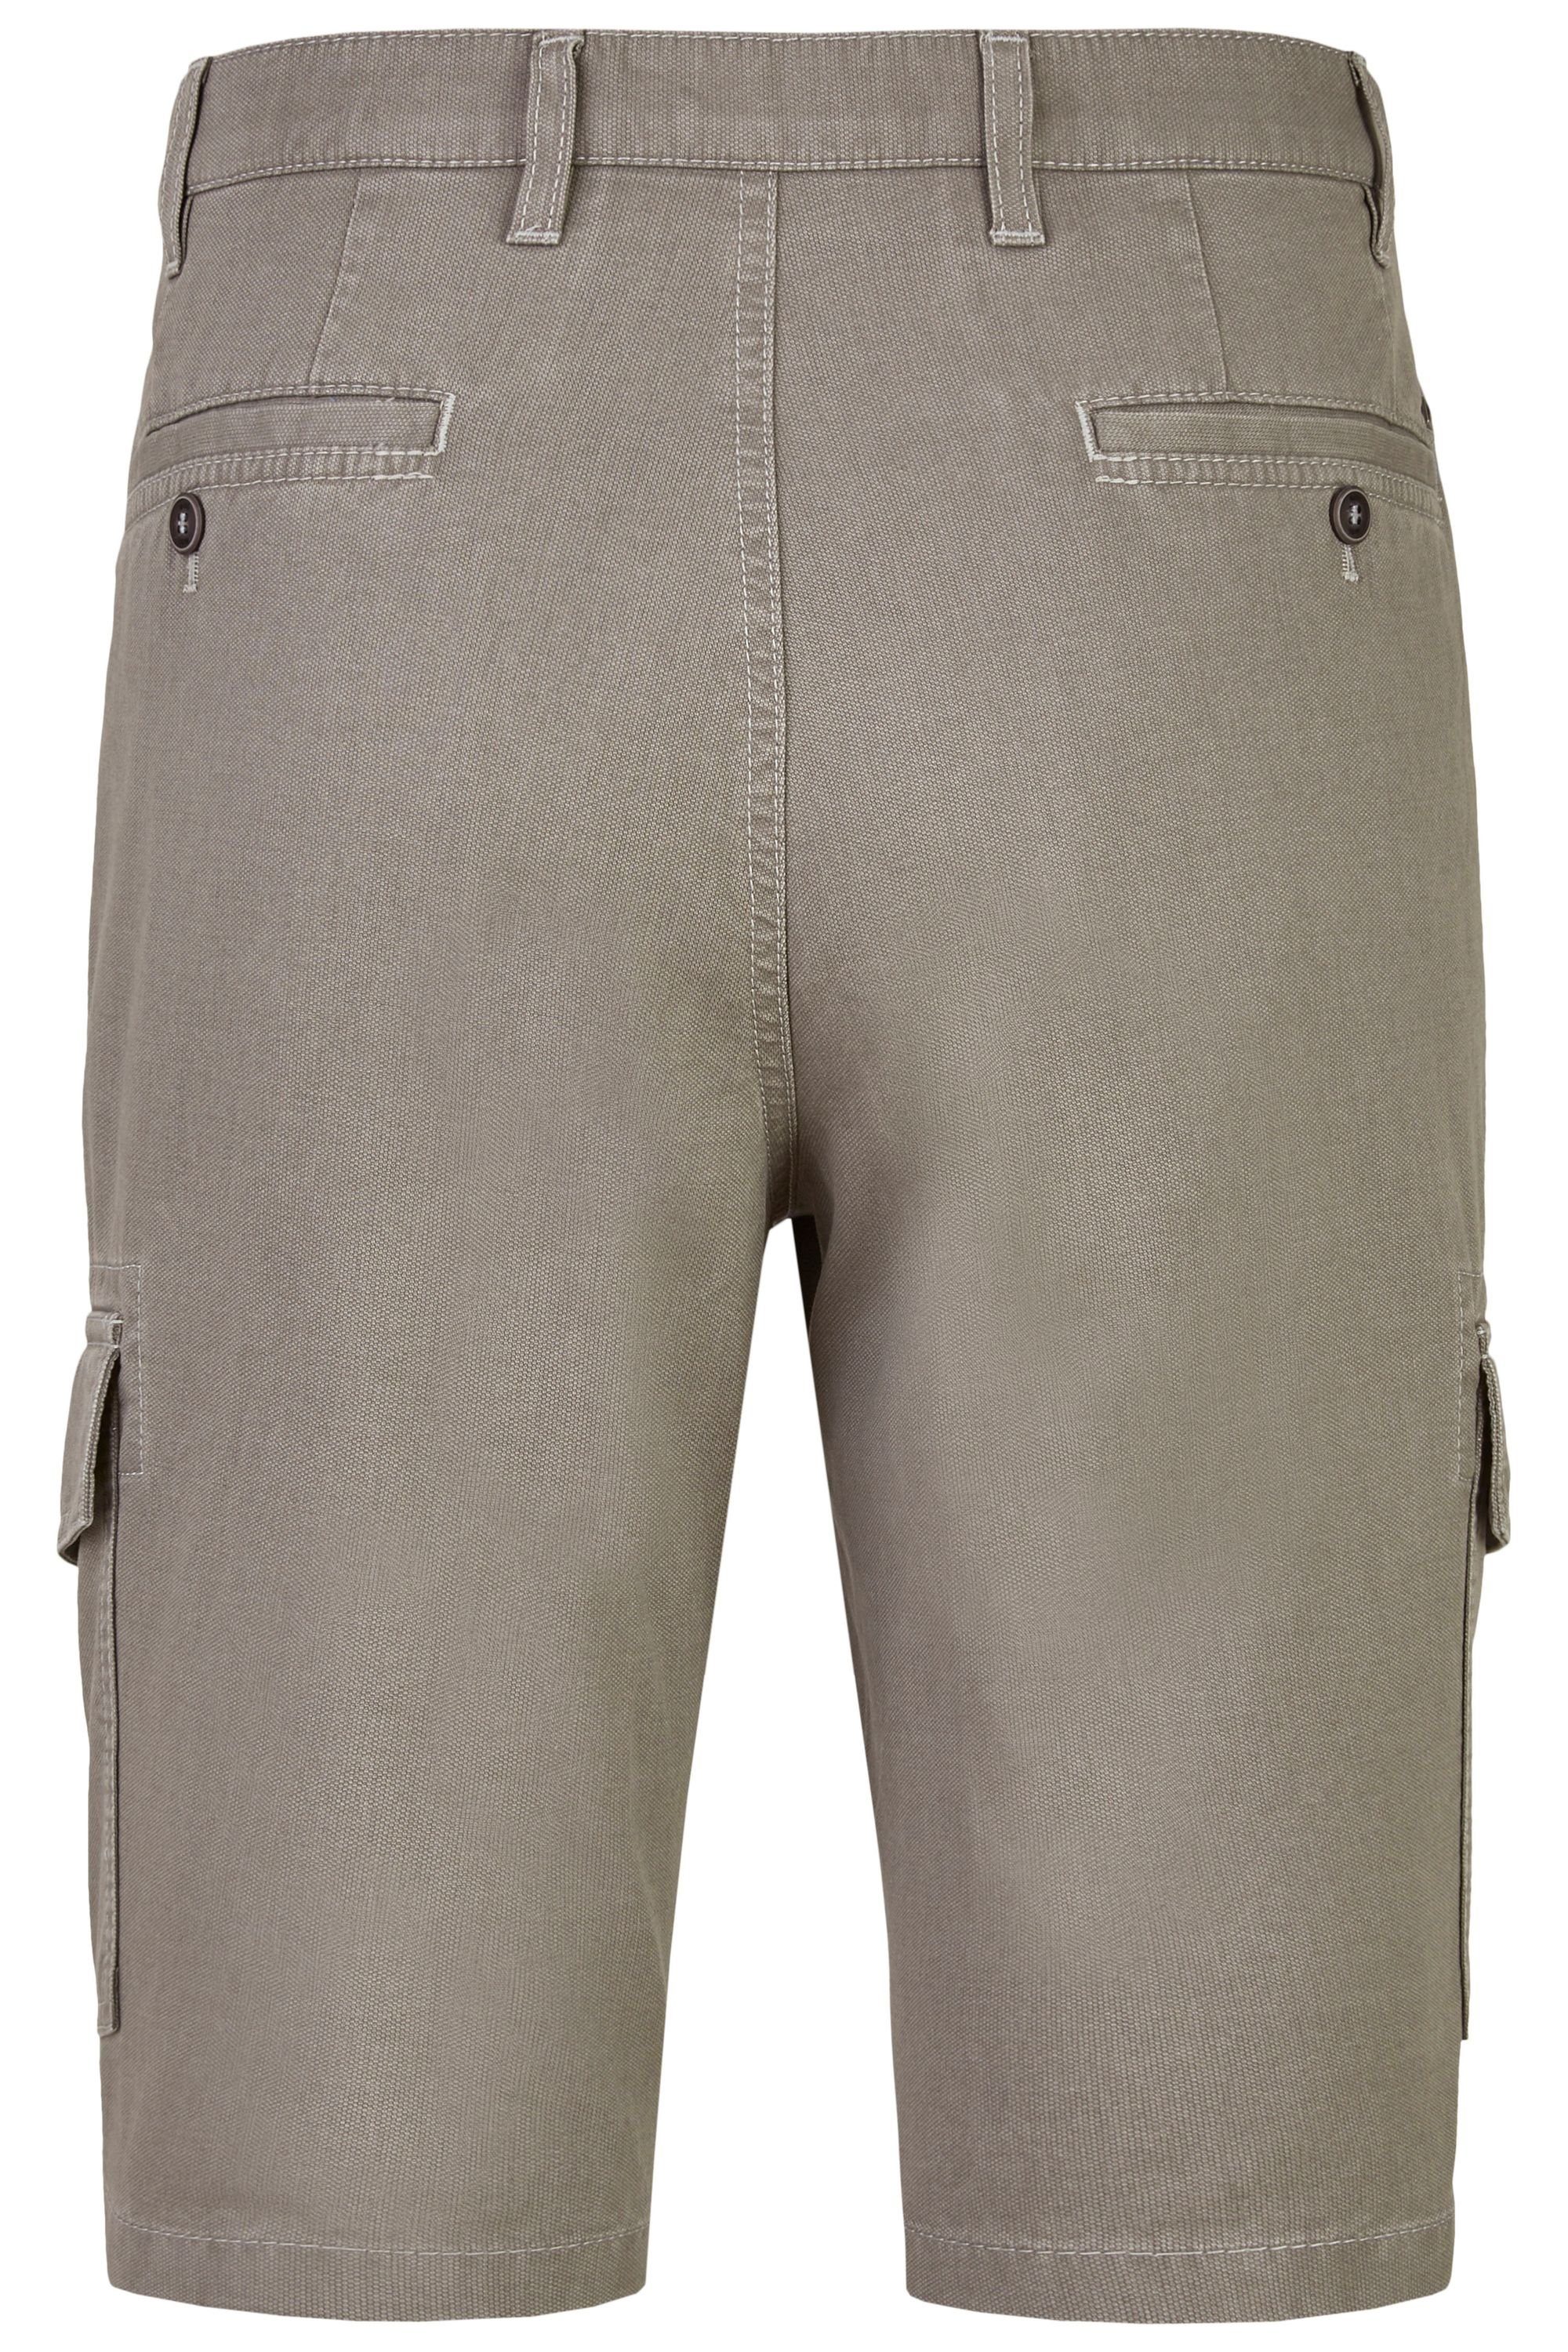 Struktur aubi: Shorts Perfect Fit grau Herren Mikro aubi Modell (54) 616 Stoffhose